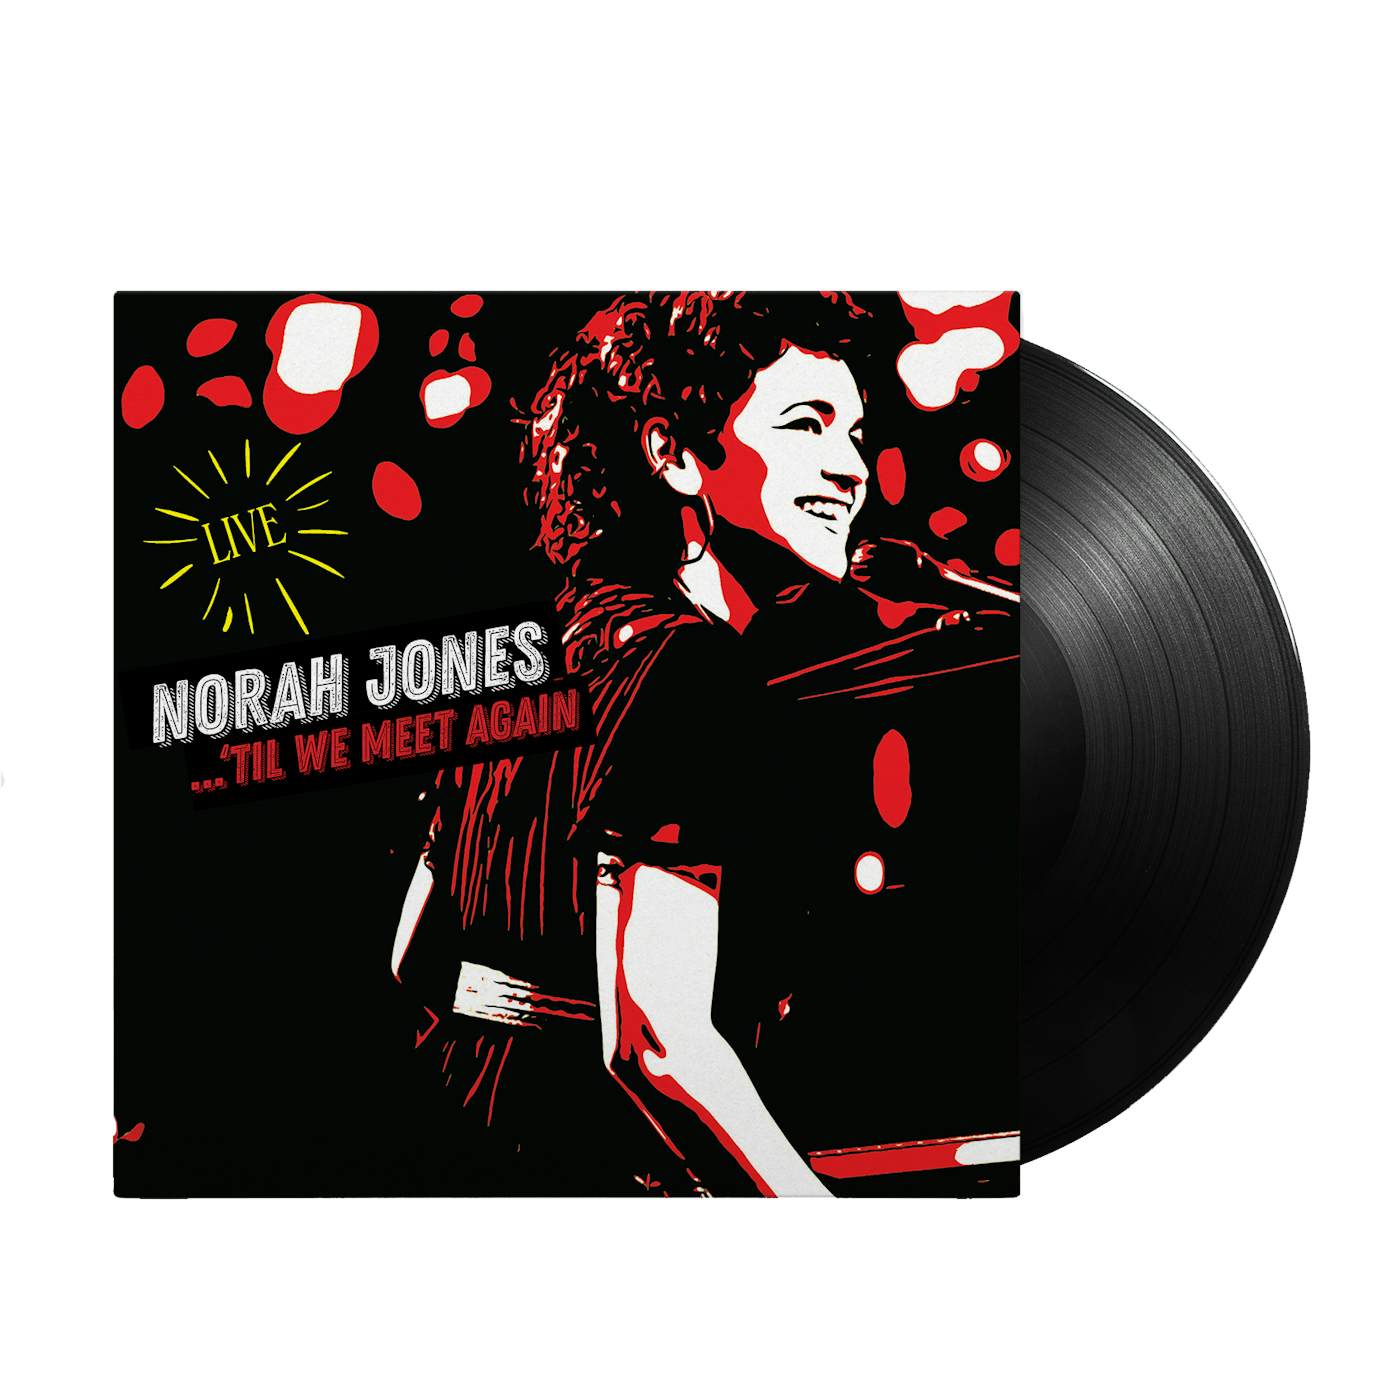 Norah Jones 'Til We Meet Again 2xLP Vinyl